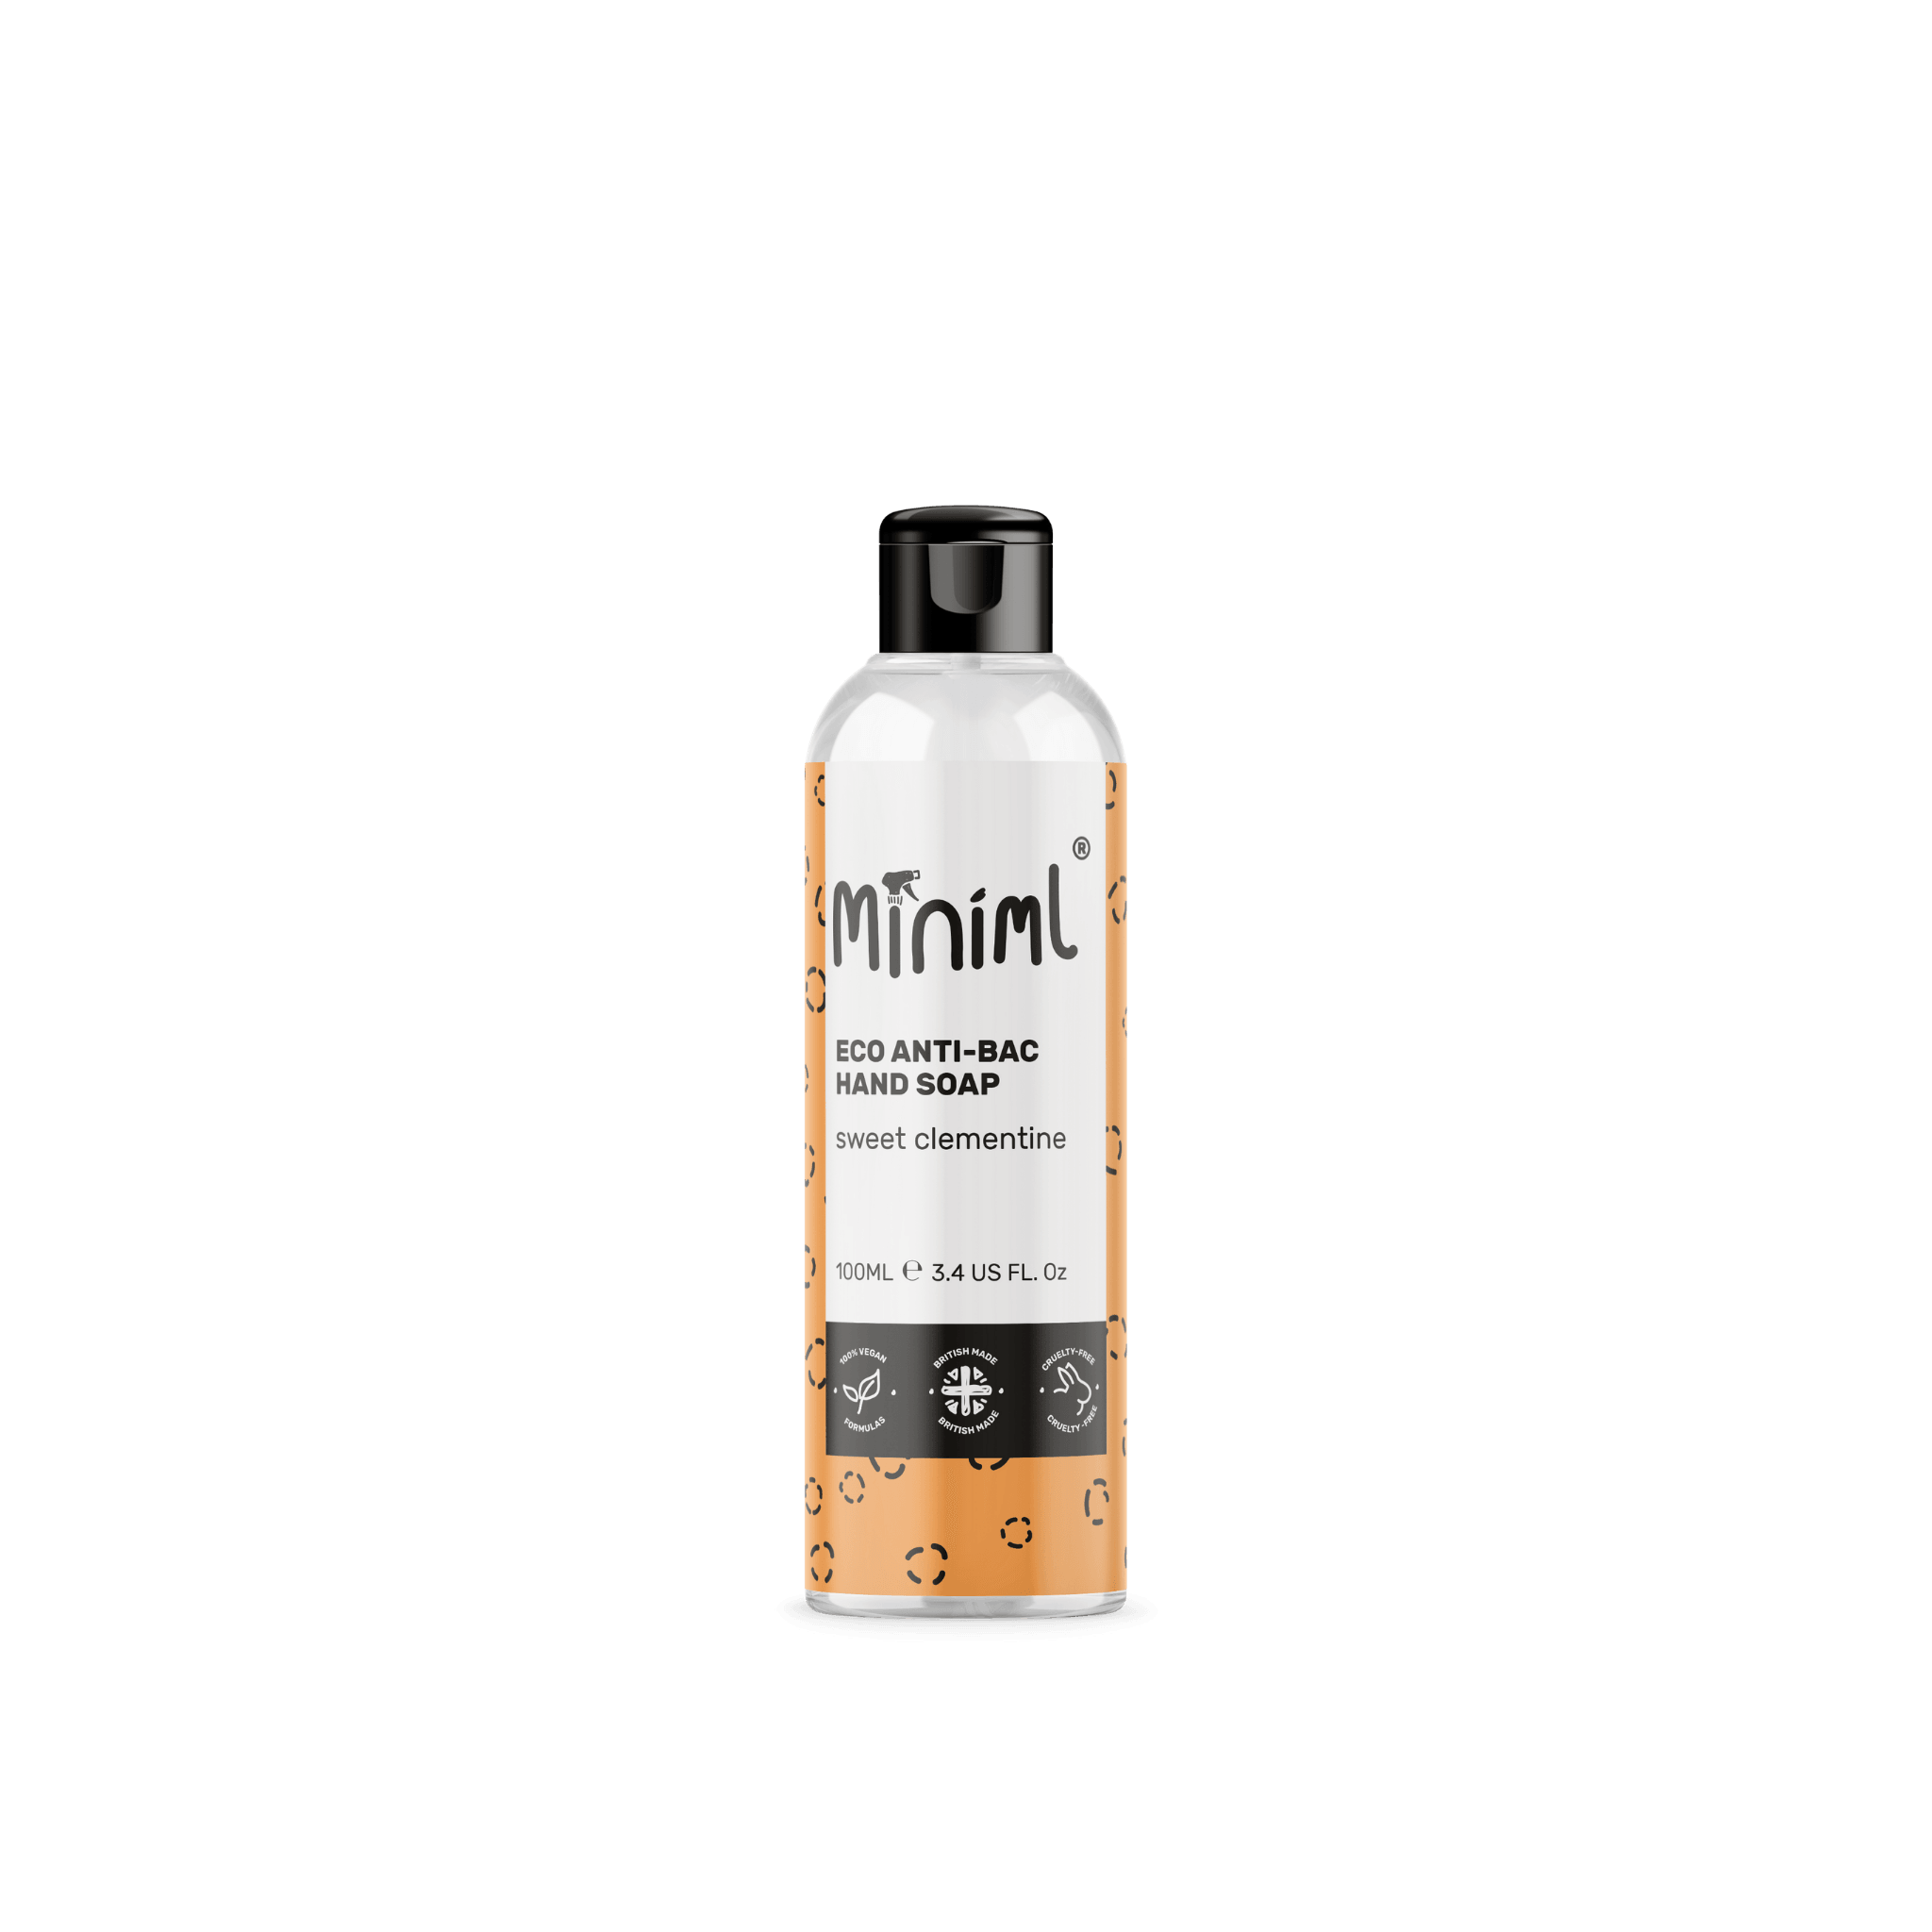 Miniml - Eco Friendly - Anti-Bac Hand Soap - Clementine - 100ml - Vending Superstore